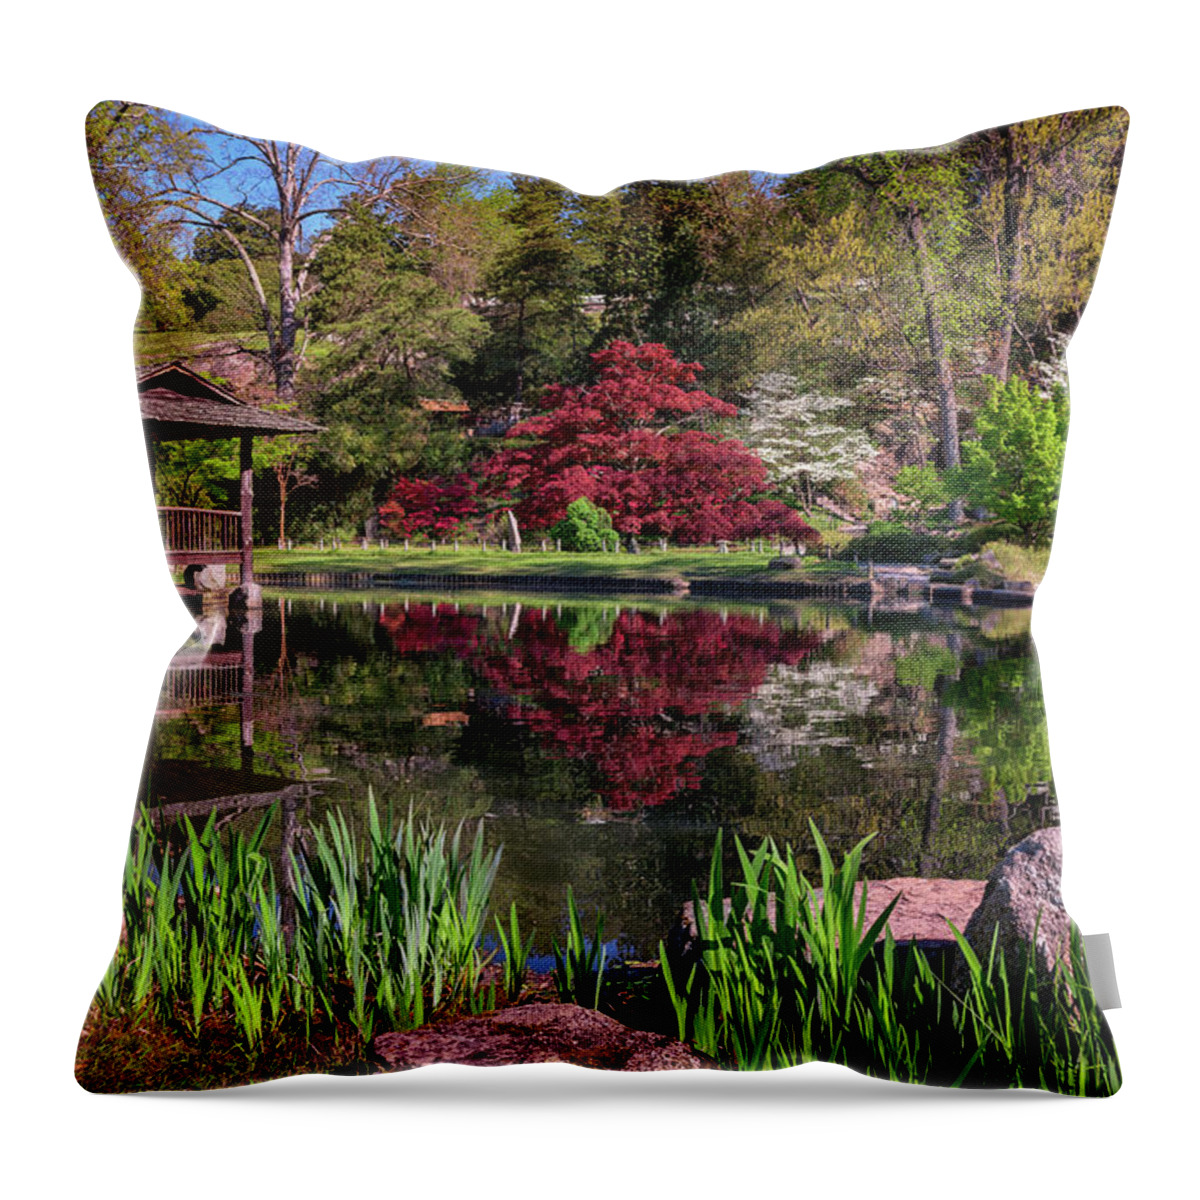 Gazebo Throw Pillow featuring the photograph Japanese Garden at Maymont by Rick Berk